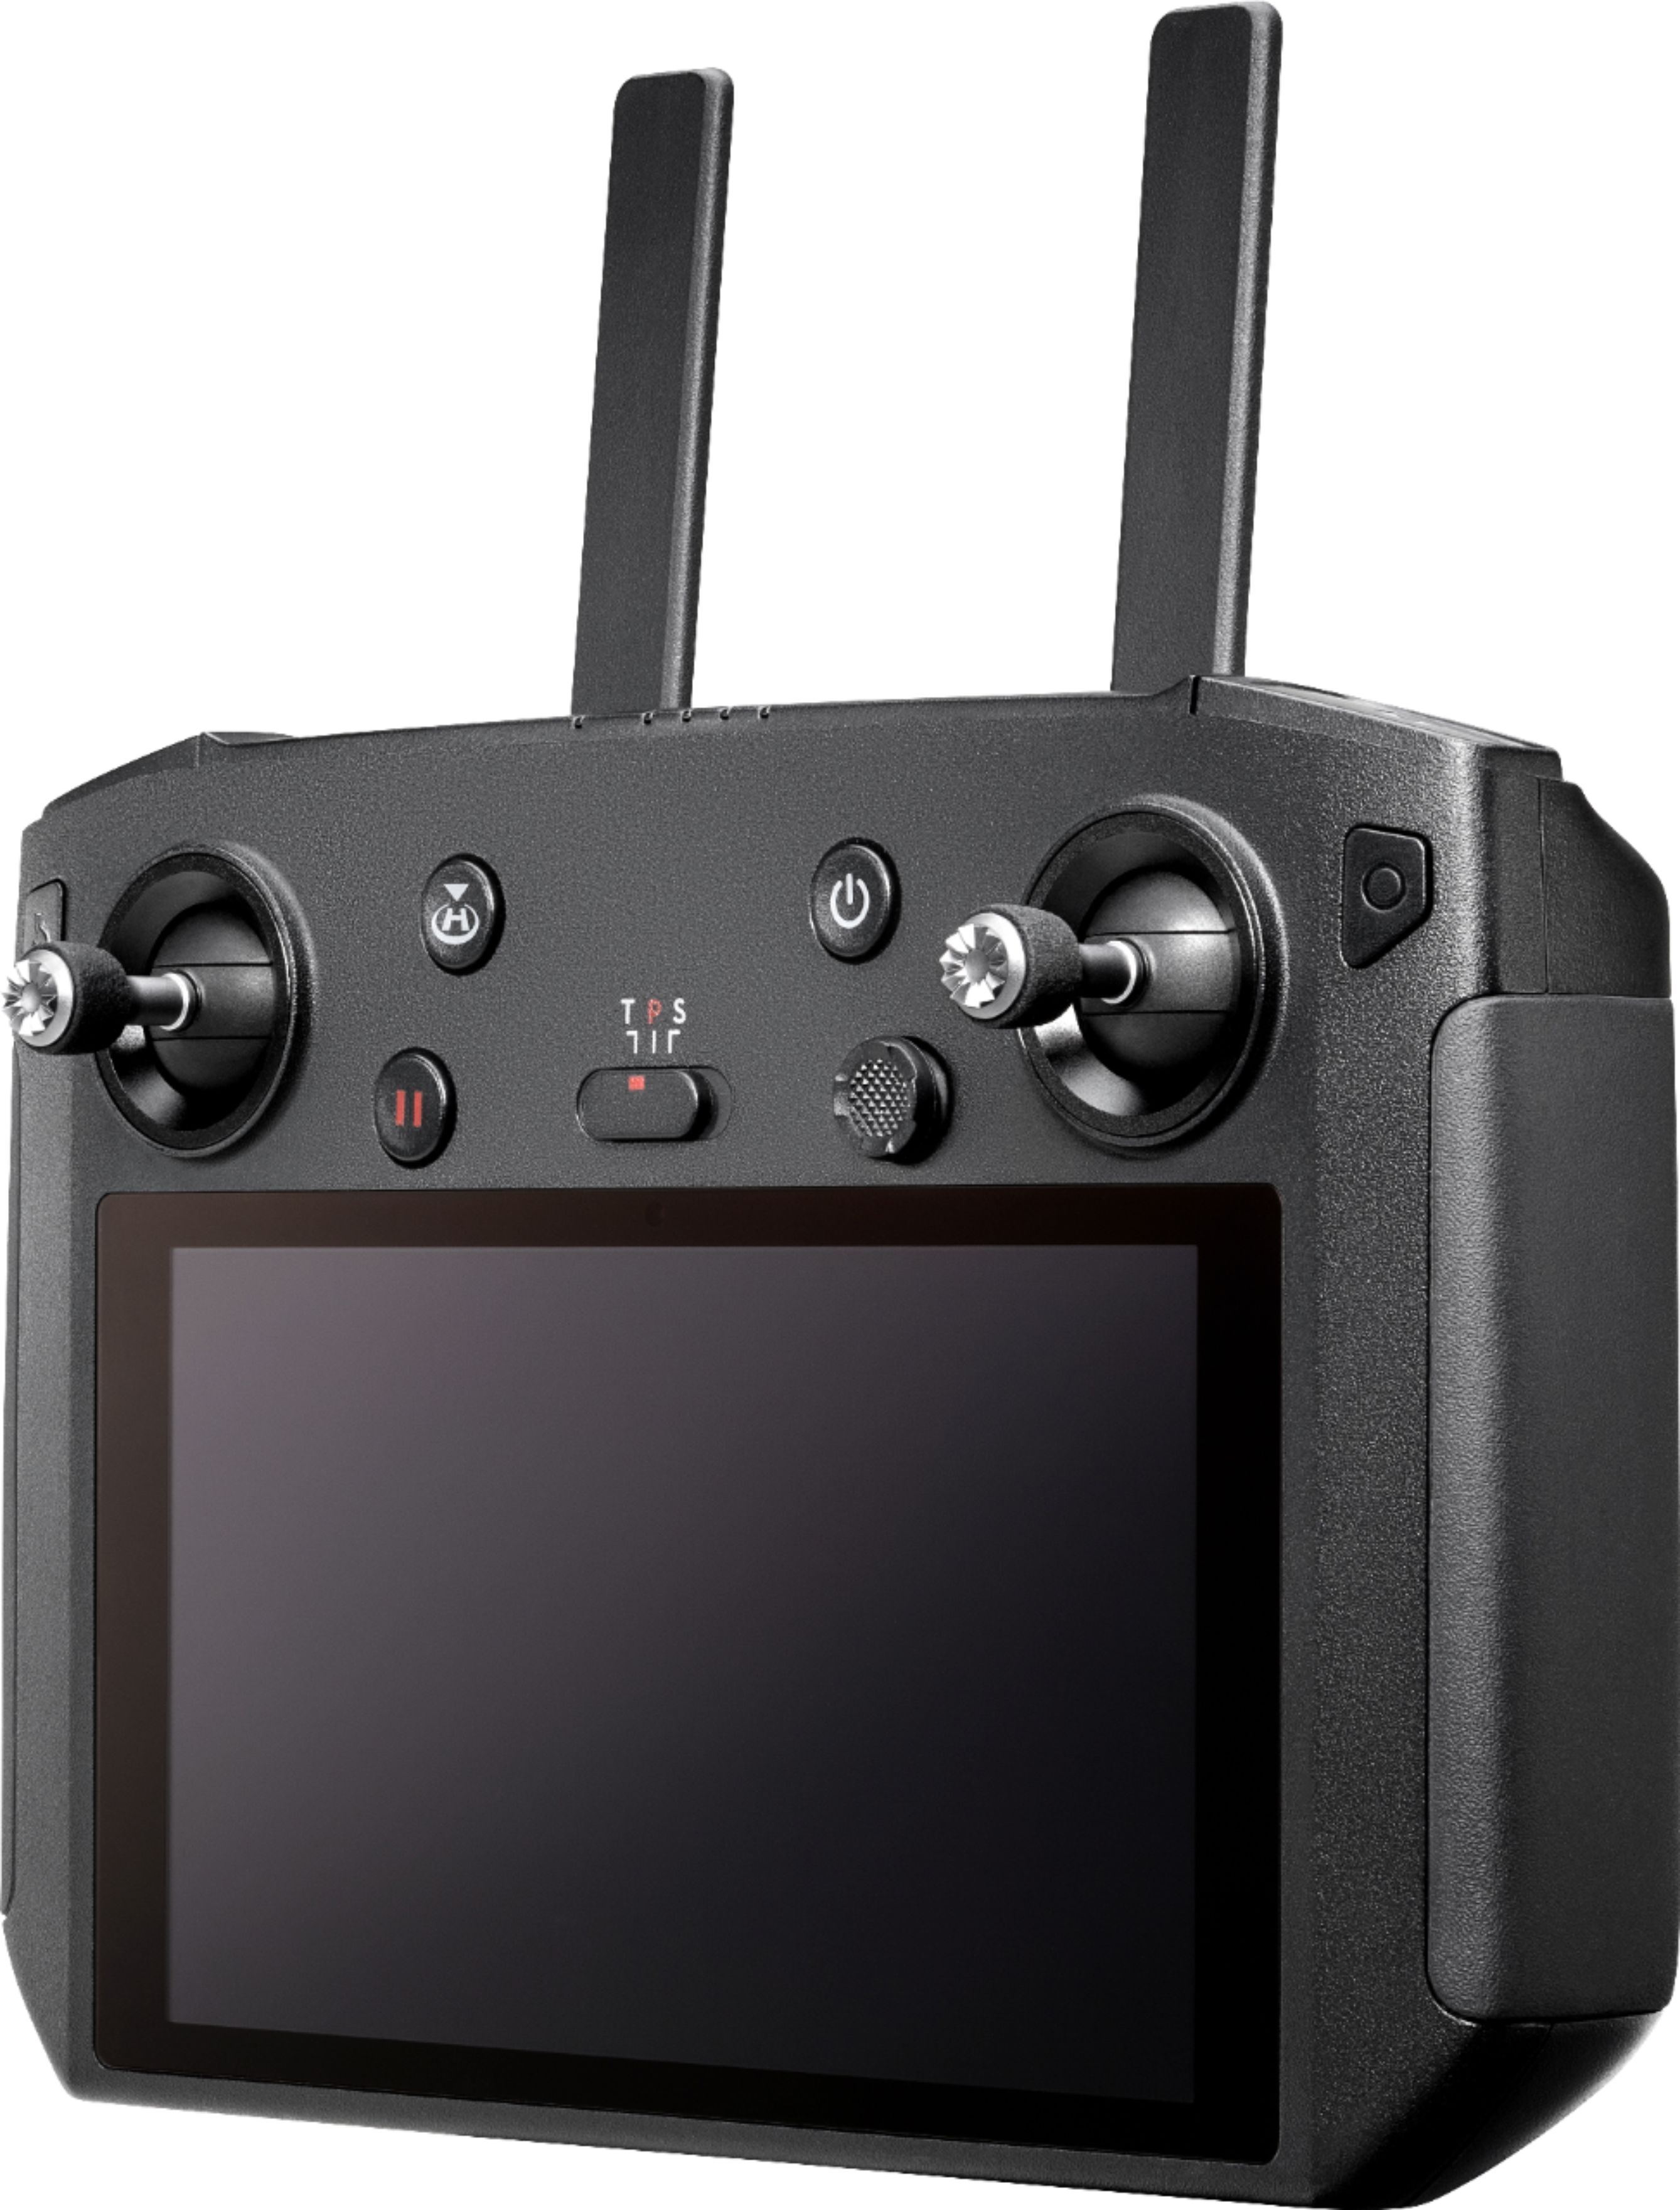 Best Buy: Mavic 2 Zoom Quadcopter with DJI Smart Controller Black 